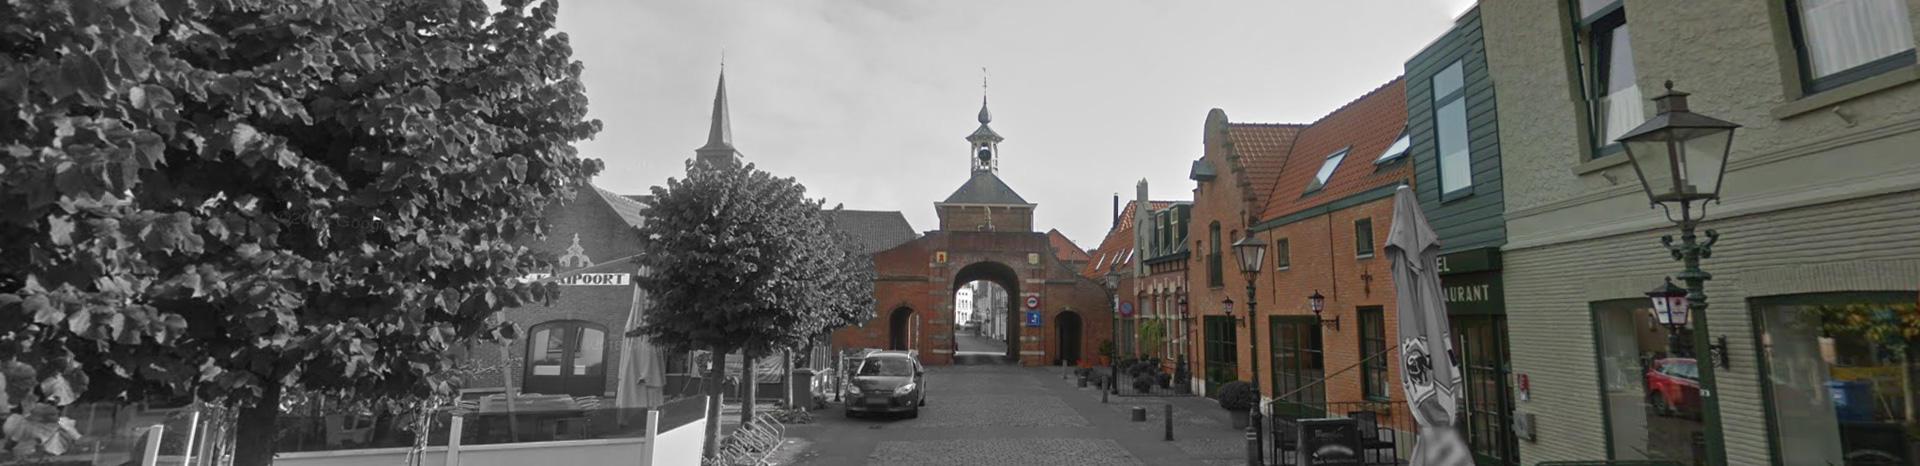 Letselschade advocaat Aardenburg | LetselPro